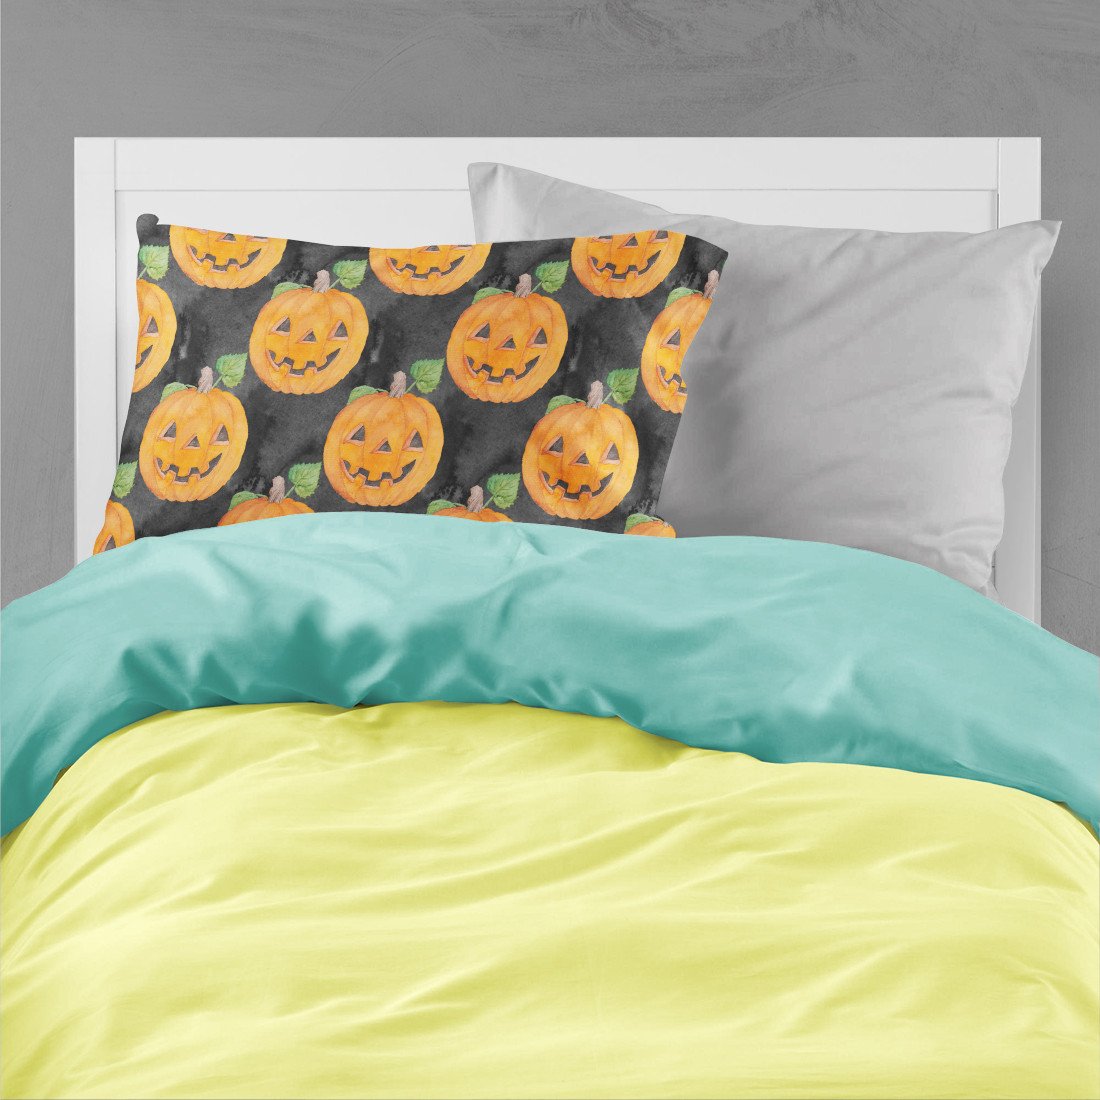 Watecolor Halloween Jack-O-Lantern Fabric Standard Pillowcase BB7524PILLOWCASE by Caroline's Treasures